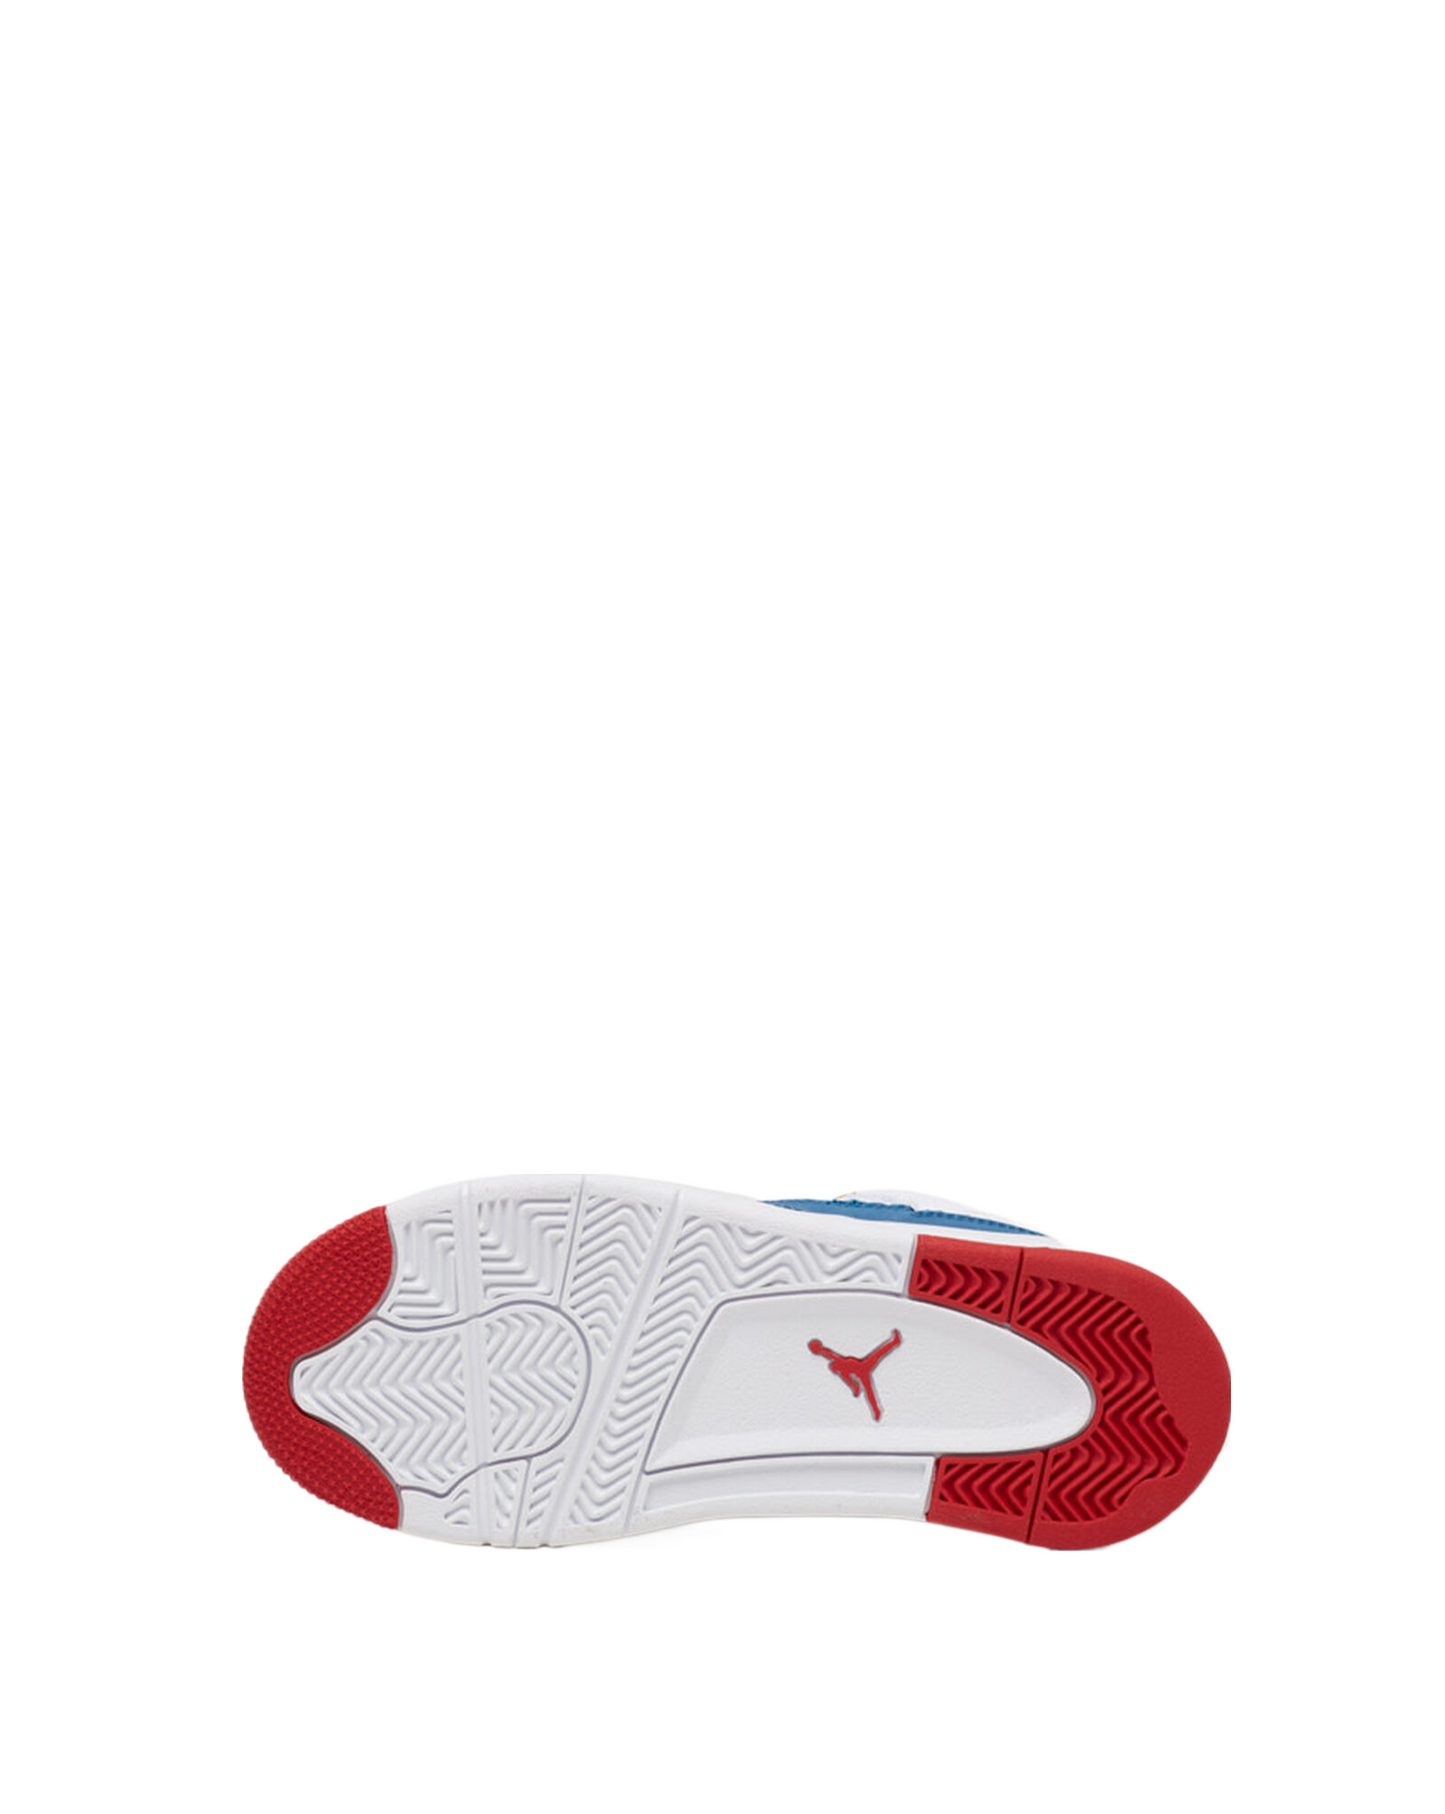 Jordan 4 Retro Preschool Sneaker French Blue / White-Gym Red DR6953-400